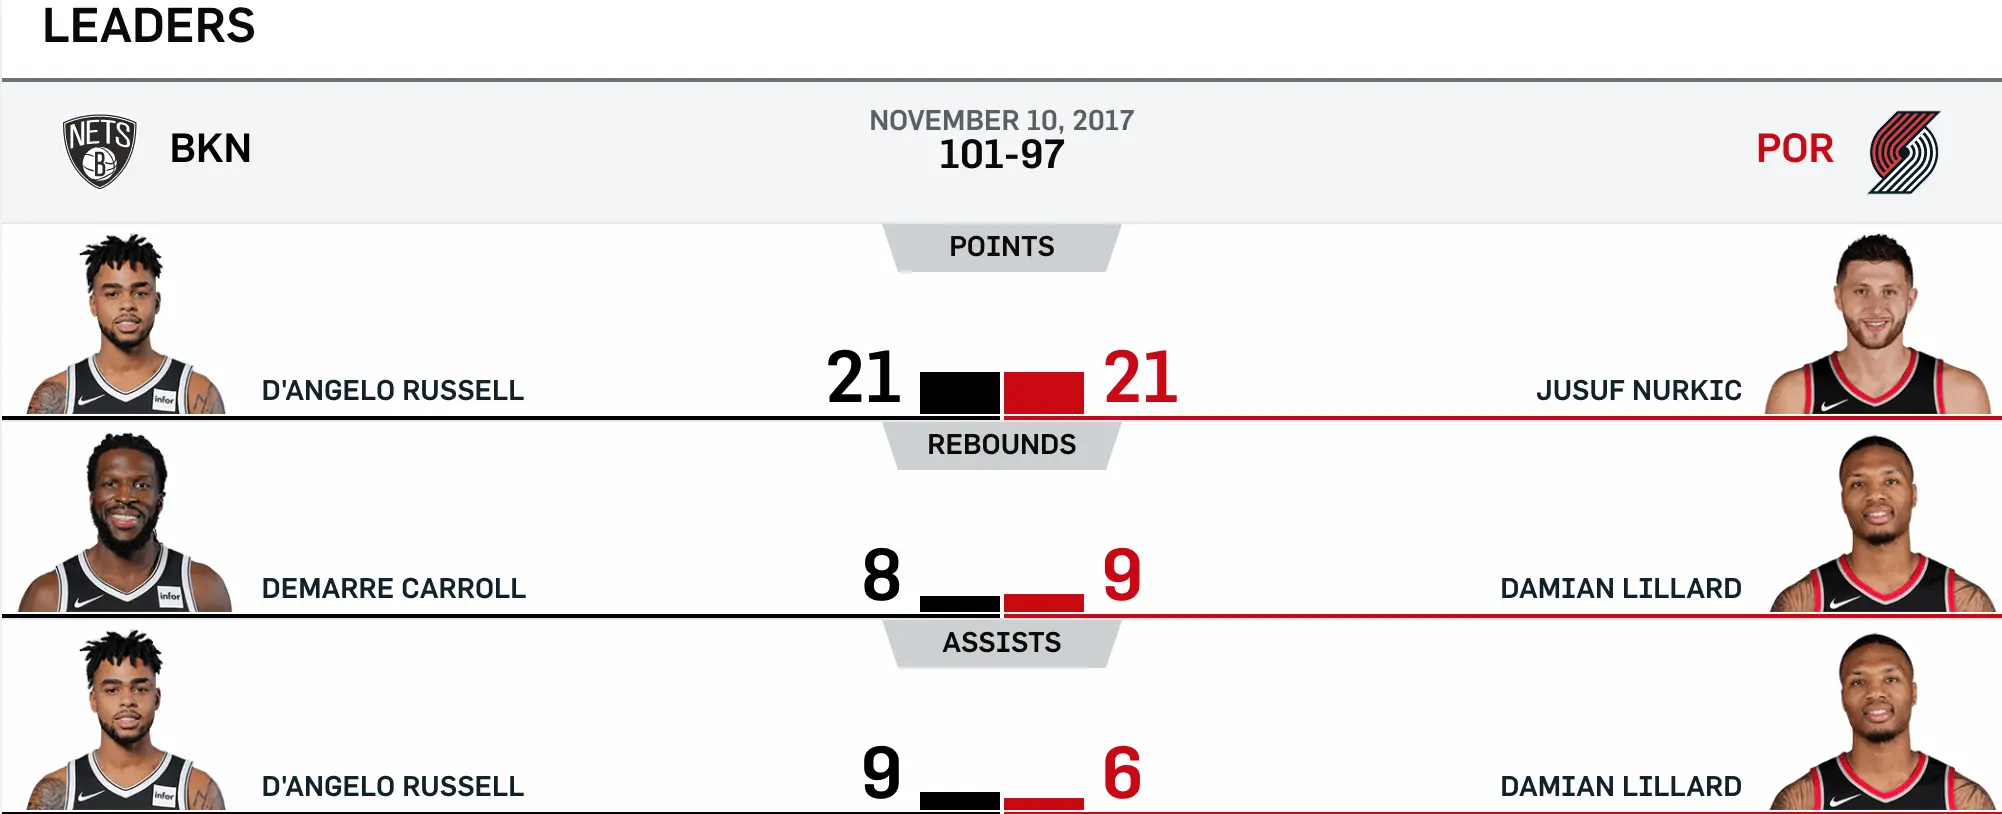 Nets vs Trail Blazers 11-10-17 Leaders